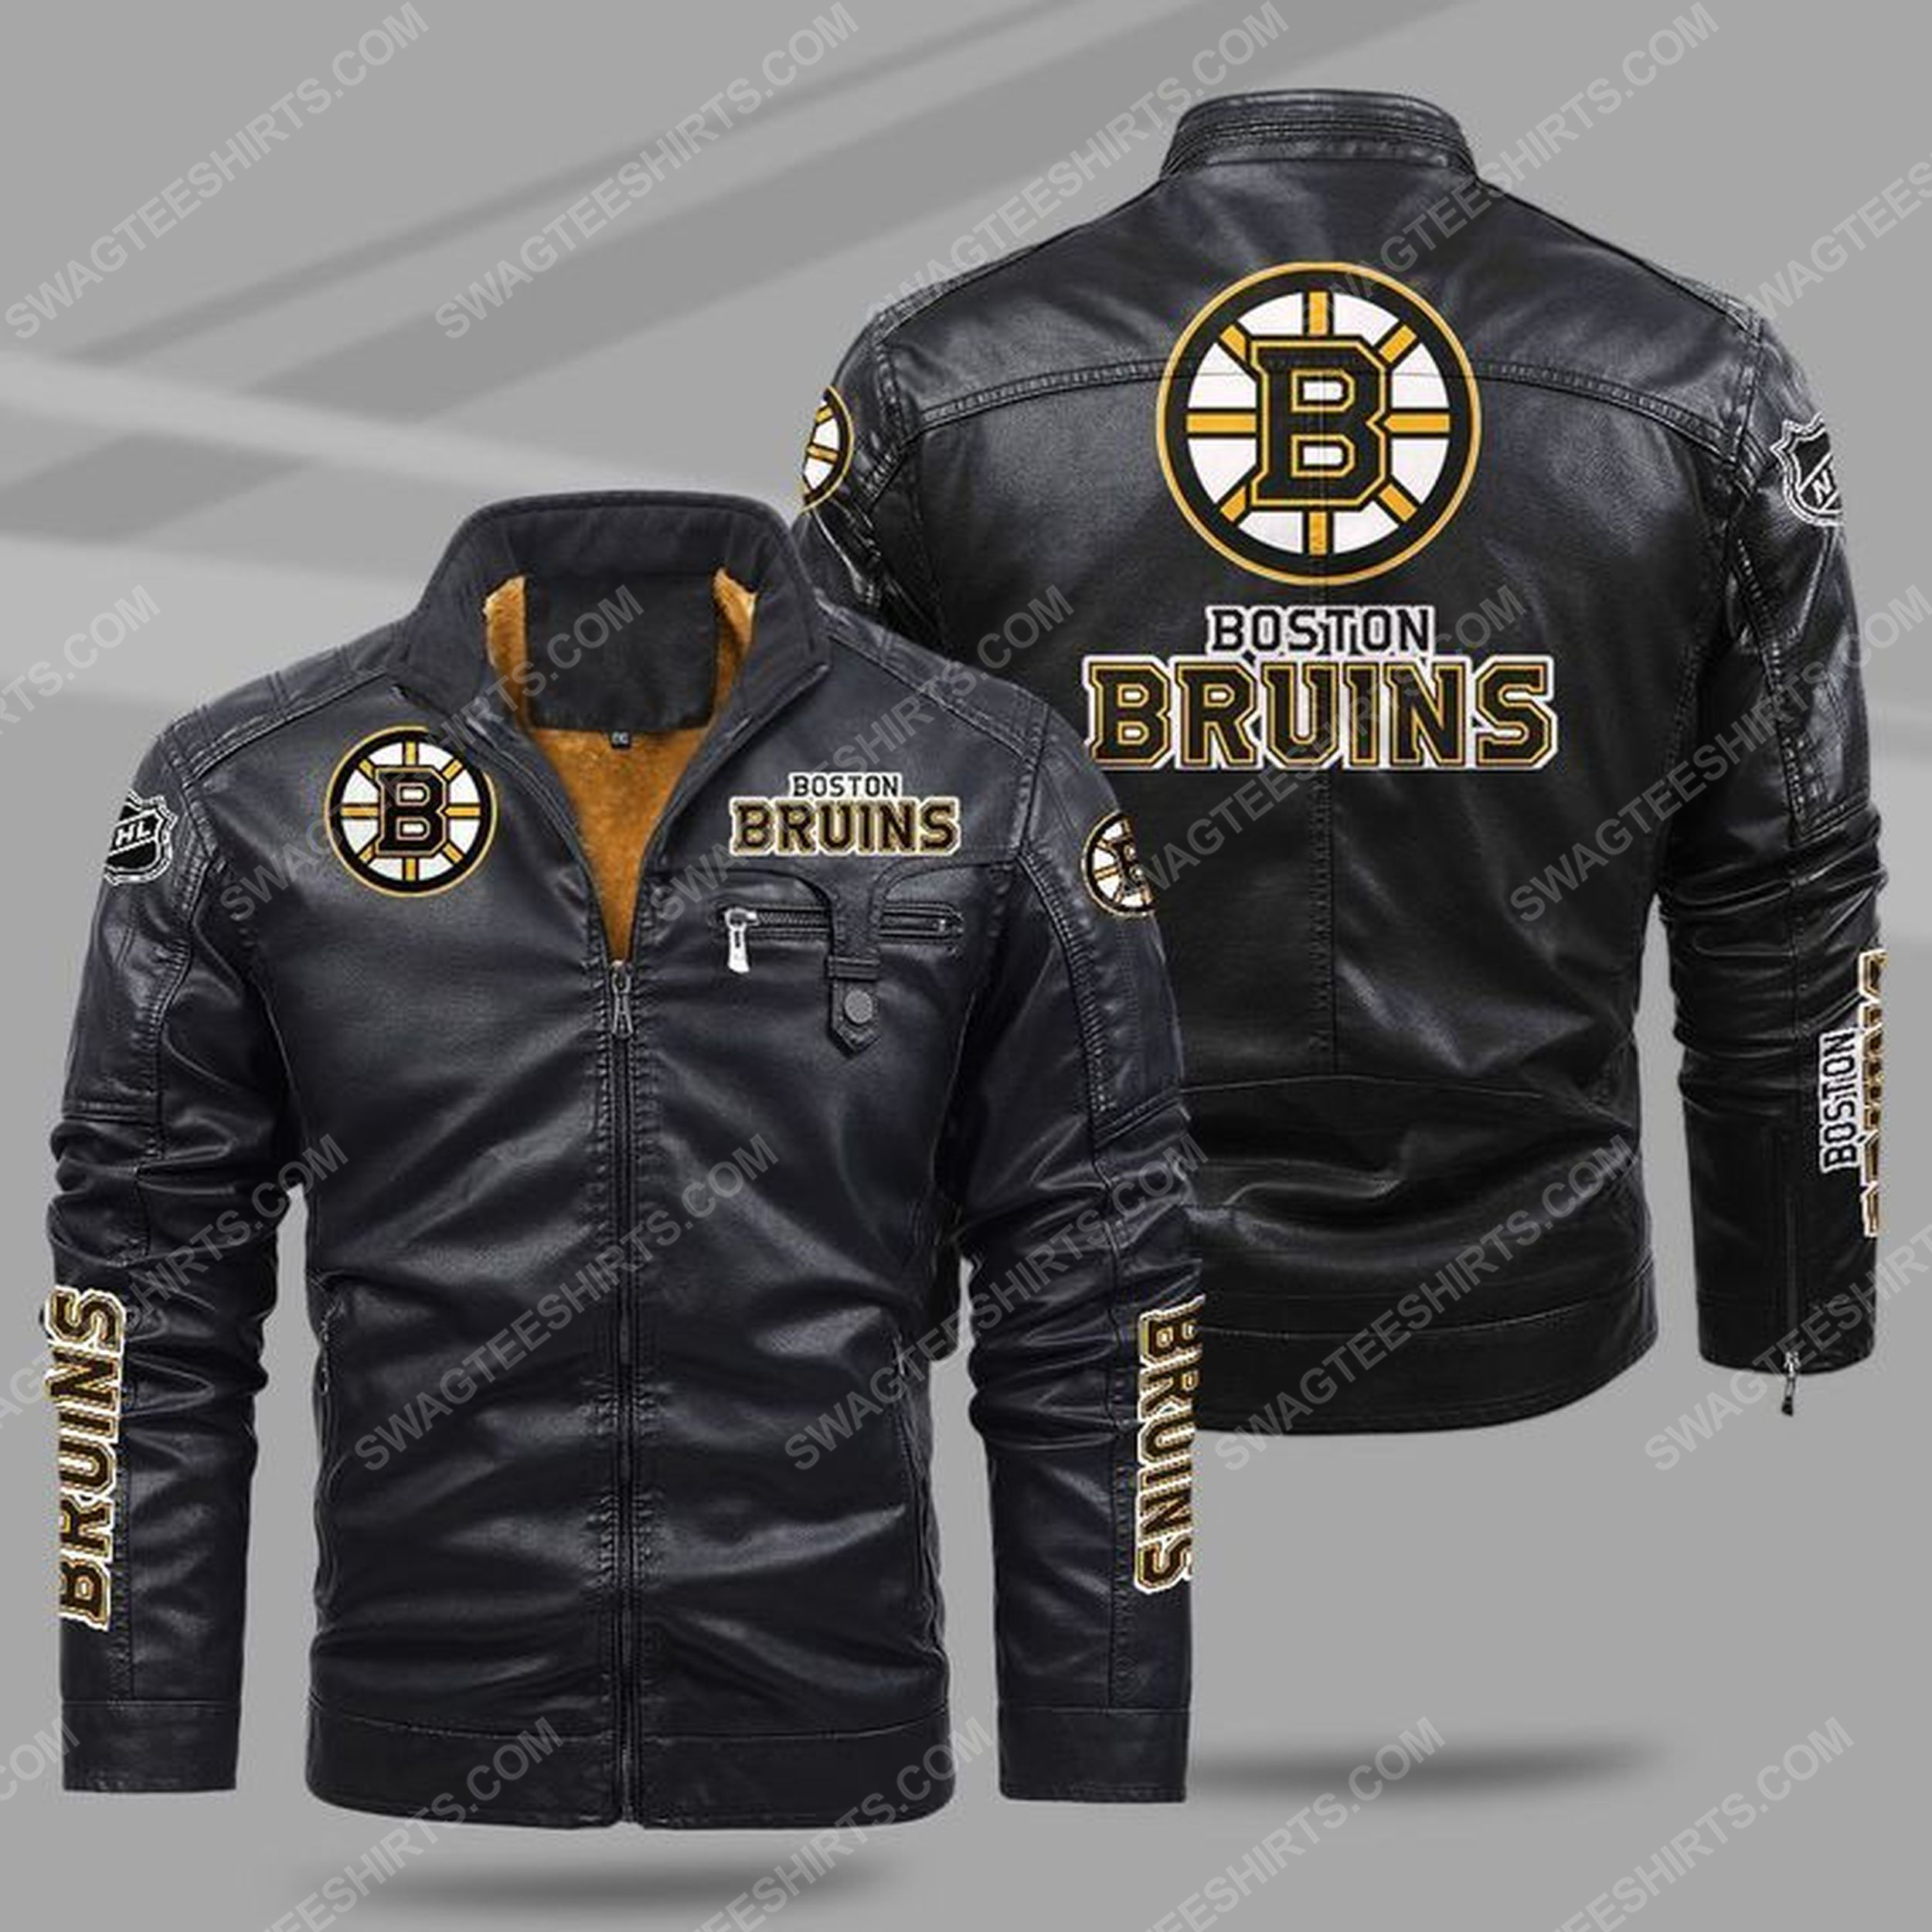 The boston bruins nhl all over print fleece leather jacket - black 1 - Copy